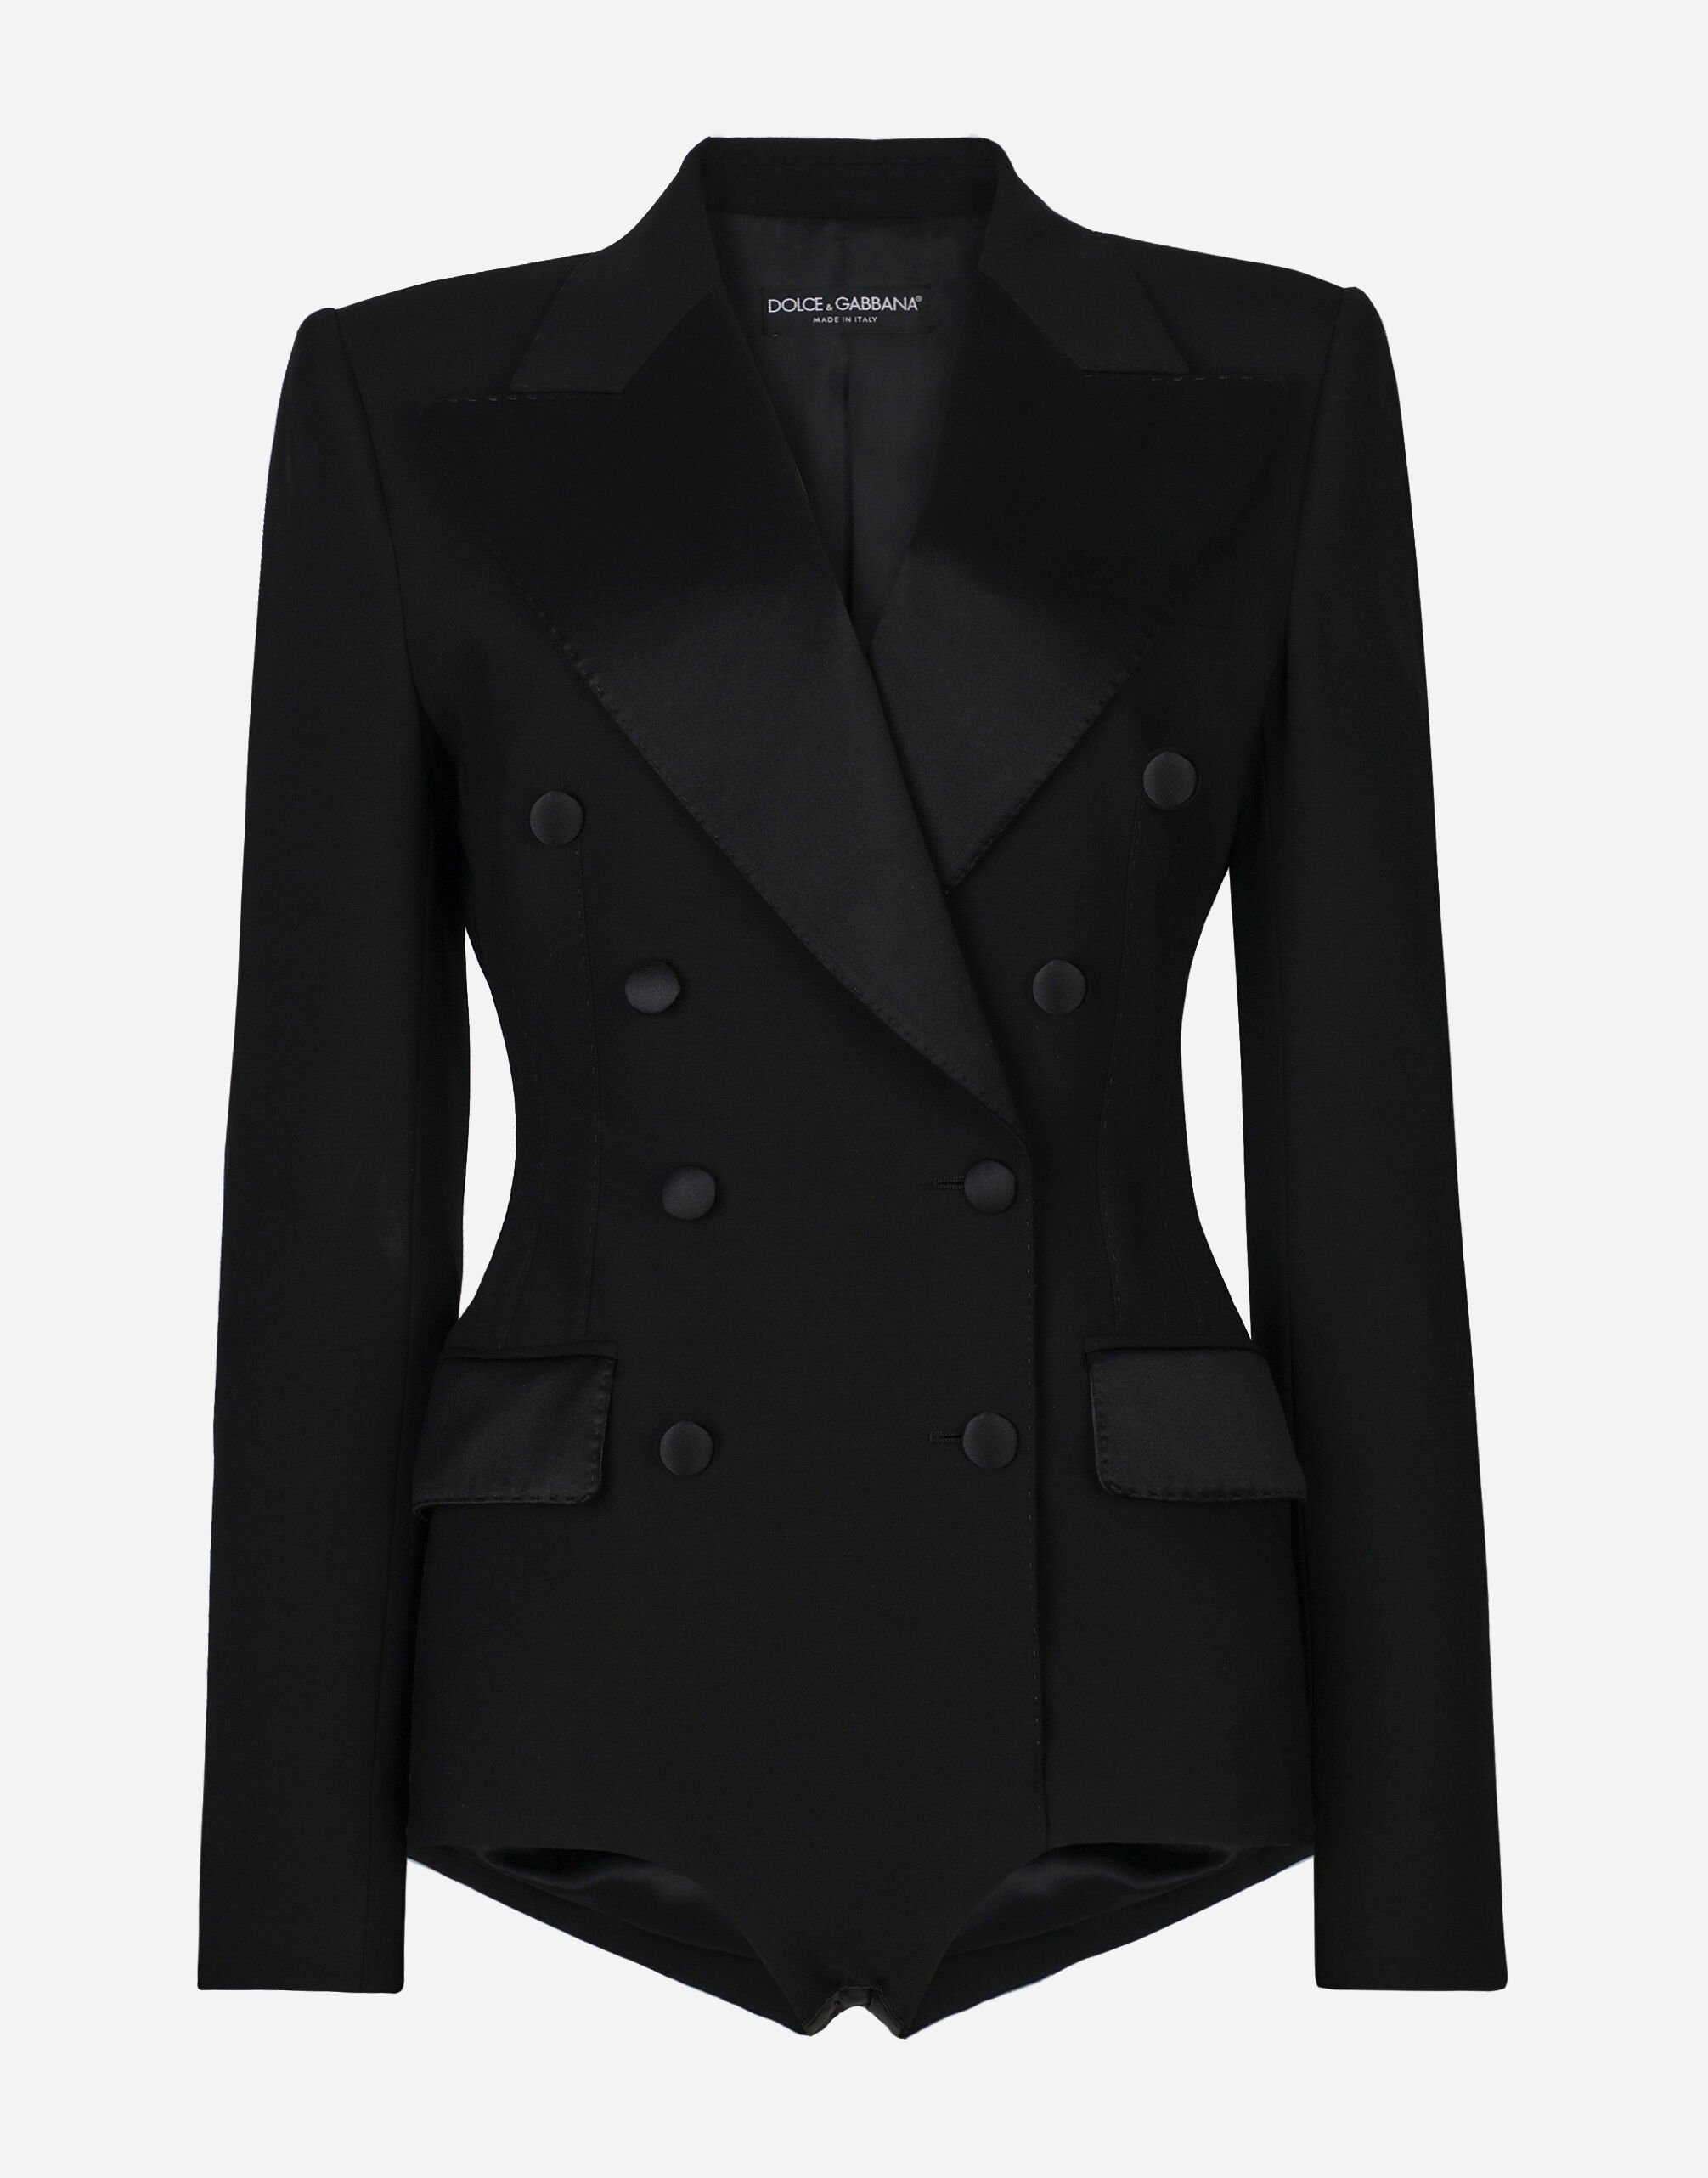 Dolce&Gabbana 连体衣式双排扣礼服夹克 多色 BB5970AR441